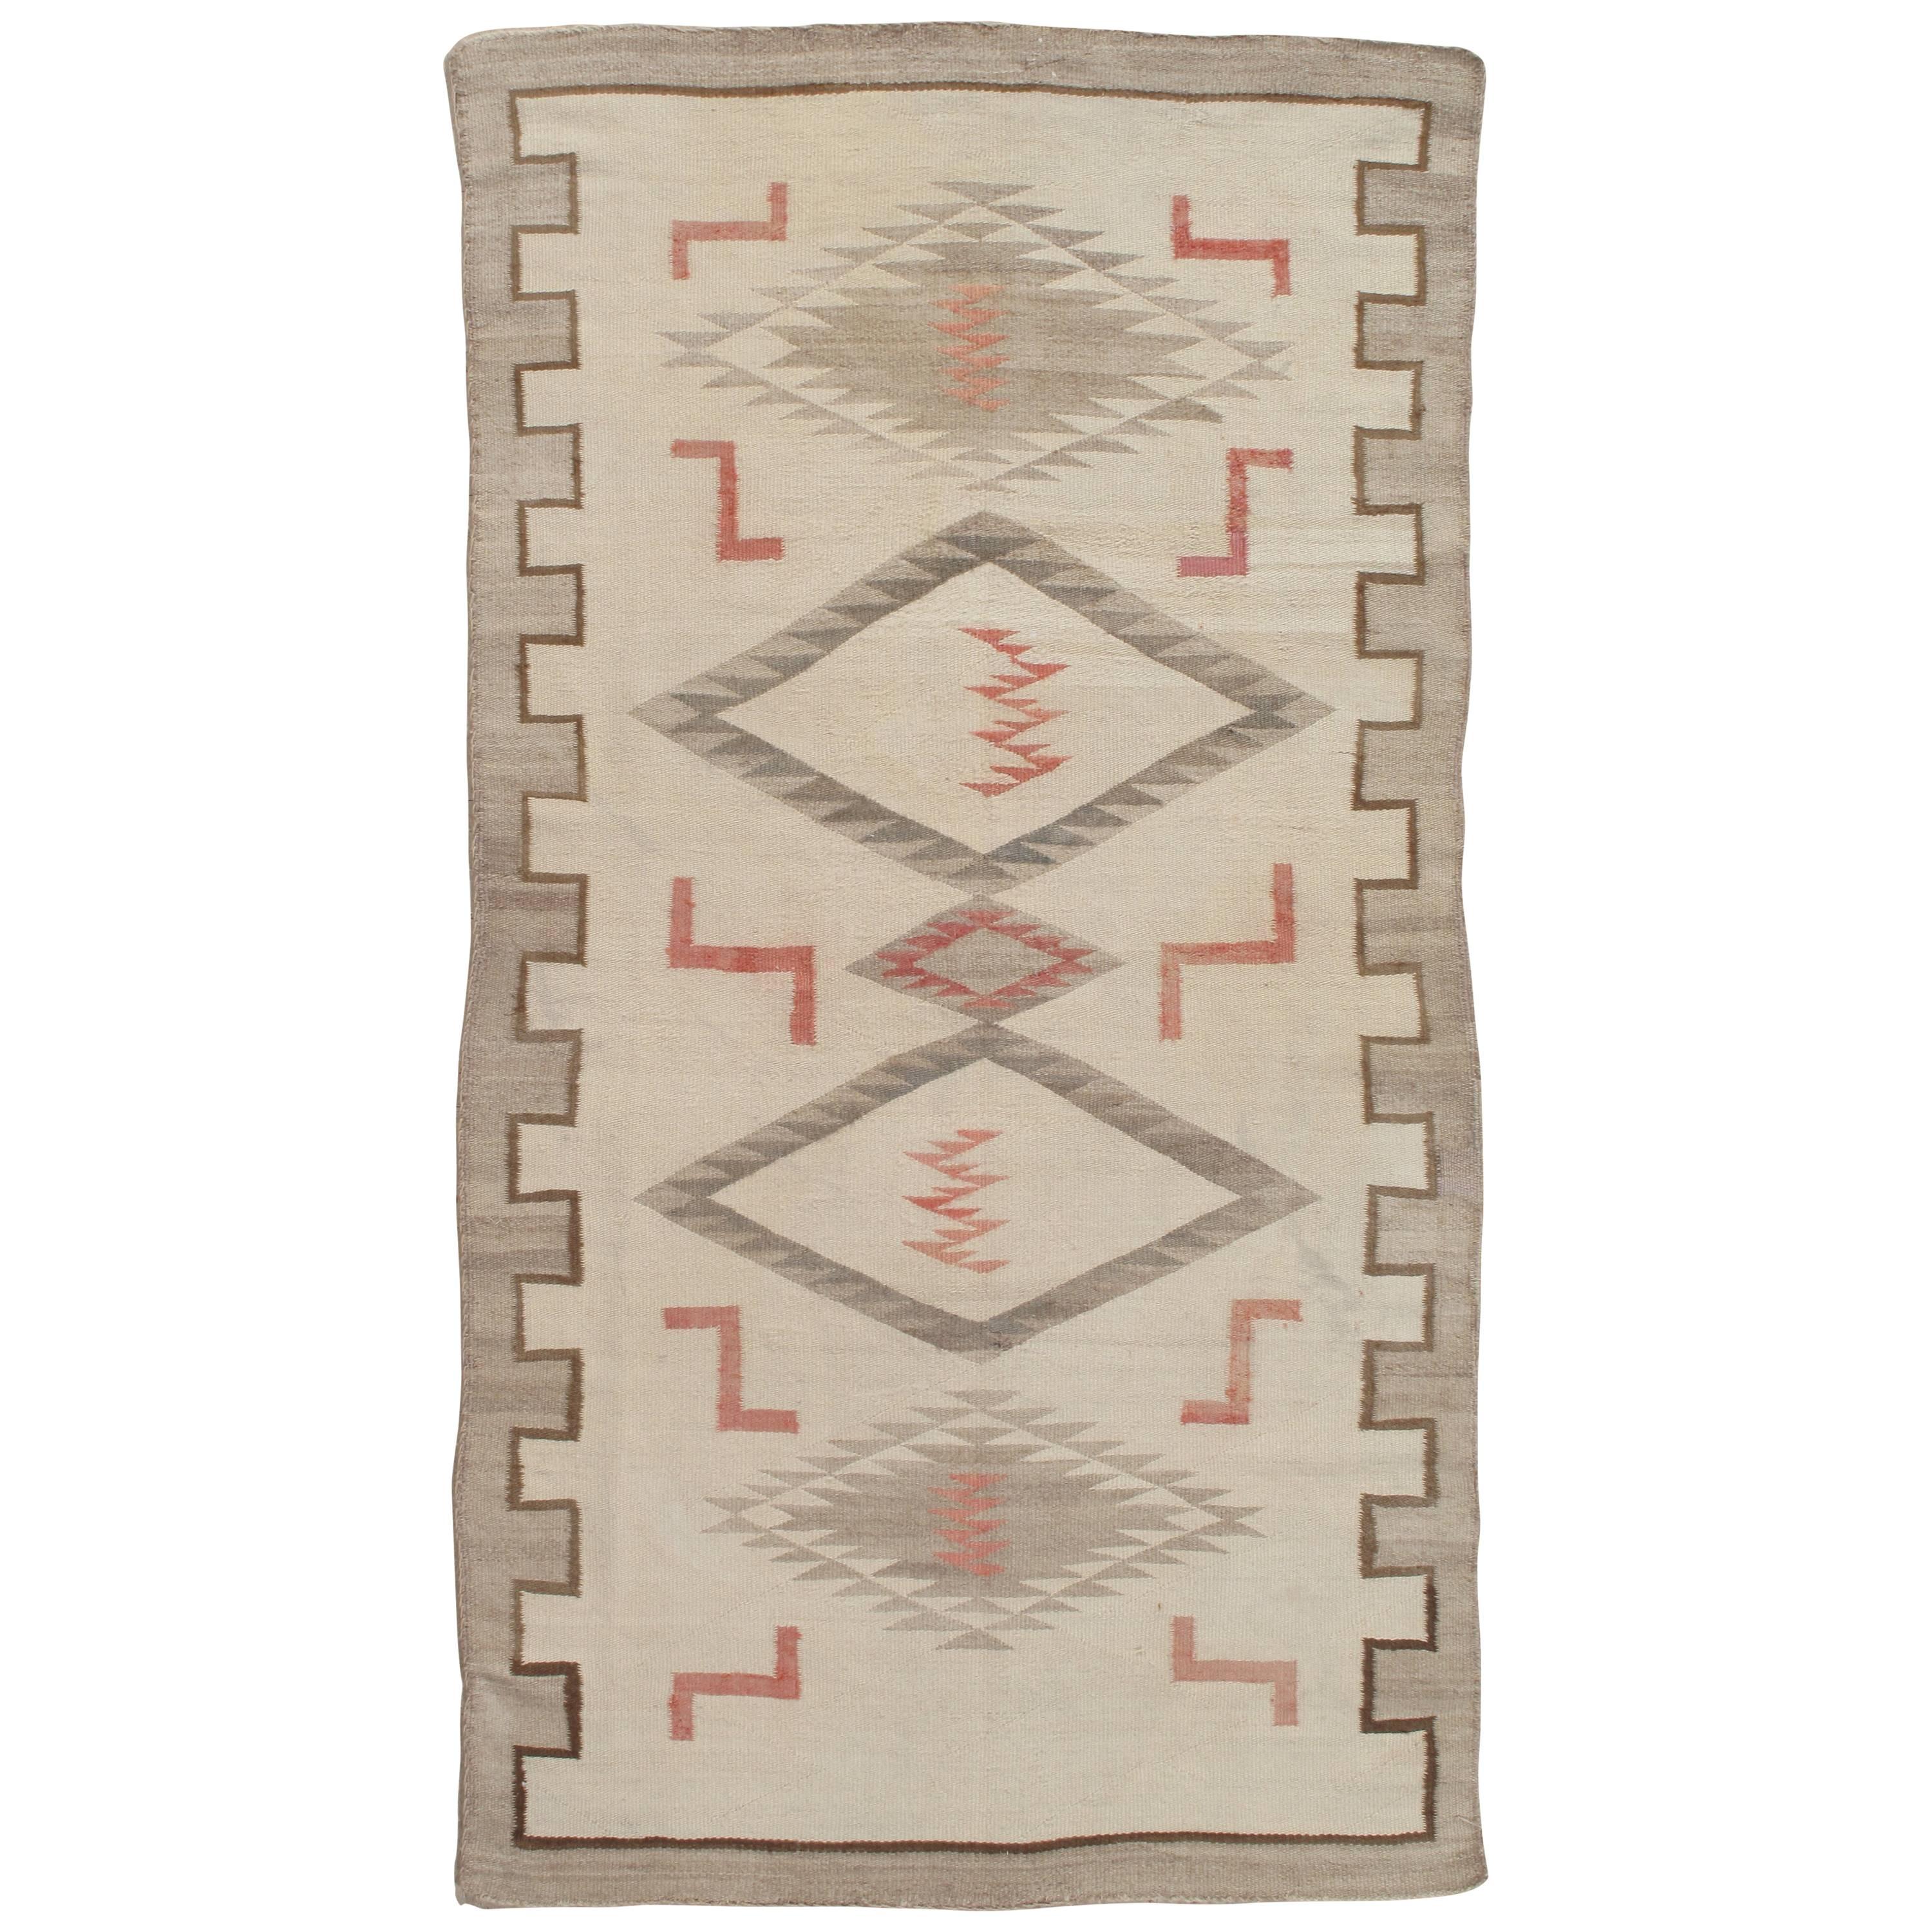 Antique Navajo Carpet, Folk Rug, Handmade Wool, Beige, Gray, Neutral